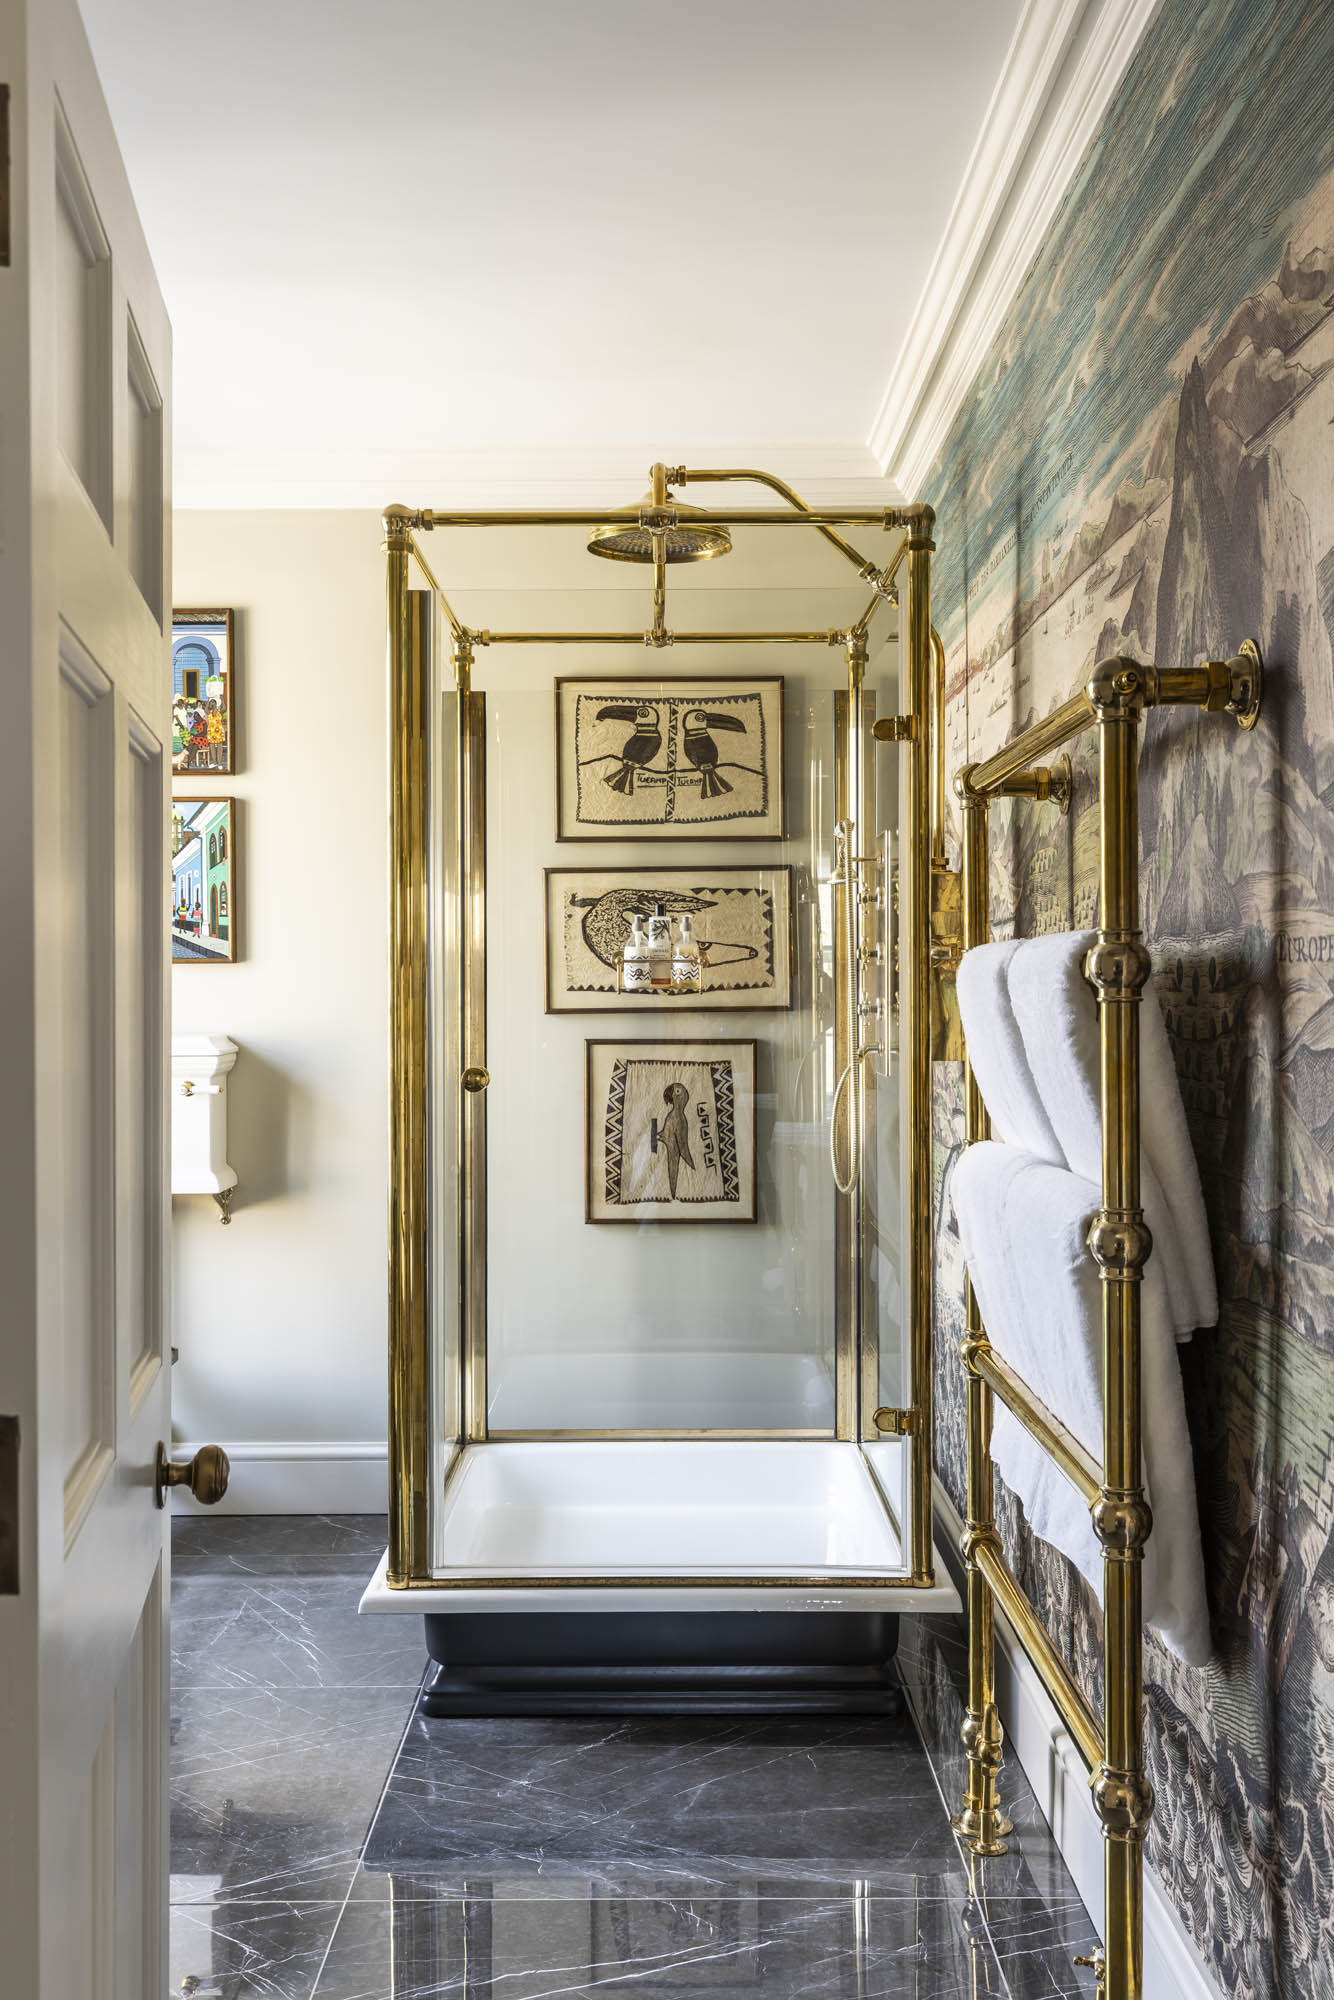 The Spittal Freestanding Shower - Drummonds Bathrooms